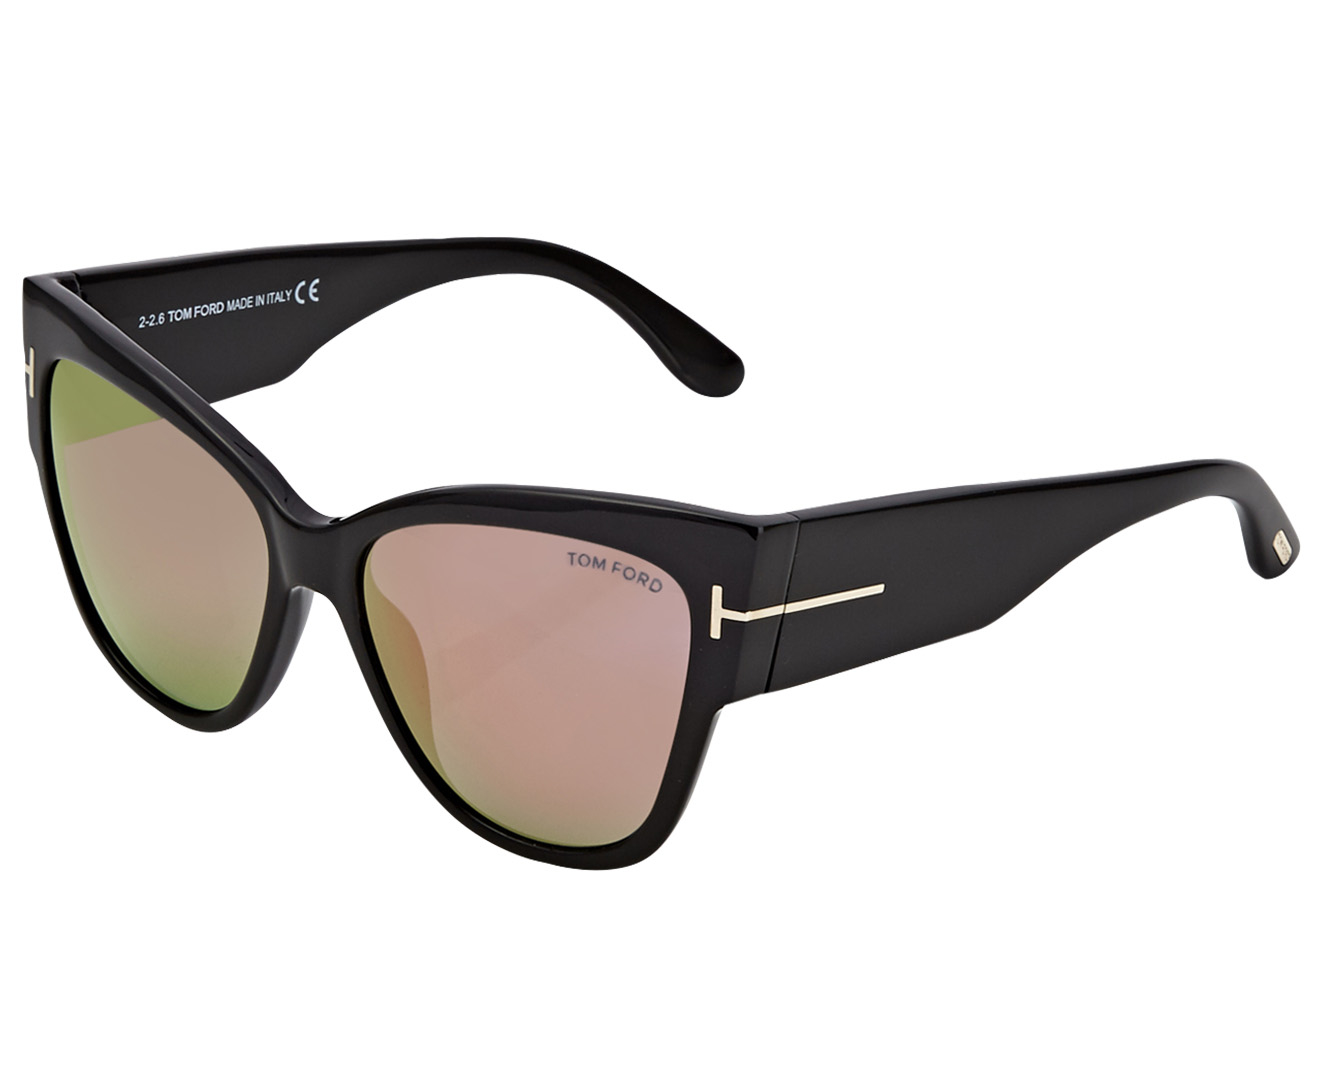 Tom Ford Women's Anoushka Cat Eye Sunglasses - Shiny Black | Catch.co.nz